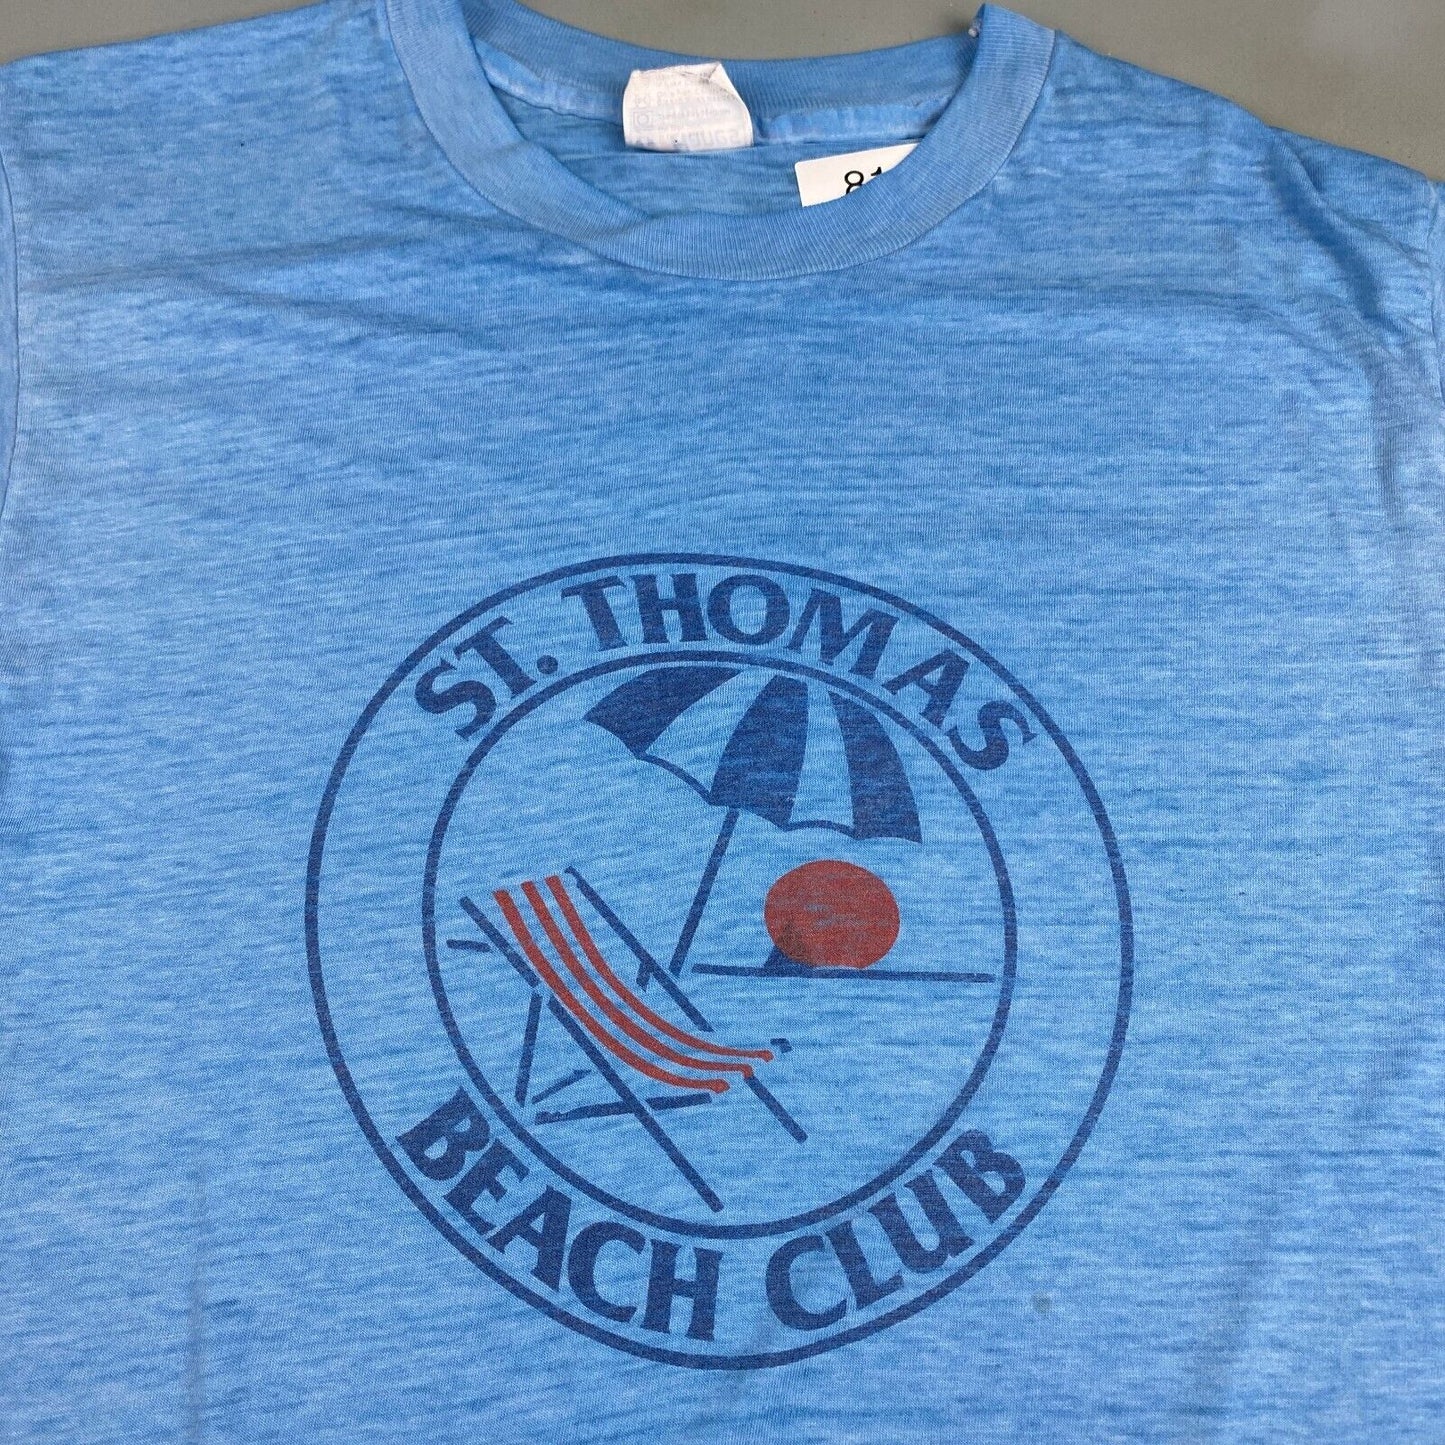 Vintage 80s St. Thomas Beach Club Blue T-Shirt sz Medium Men Adult MadeinUSA